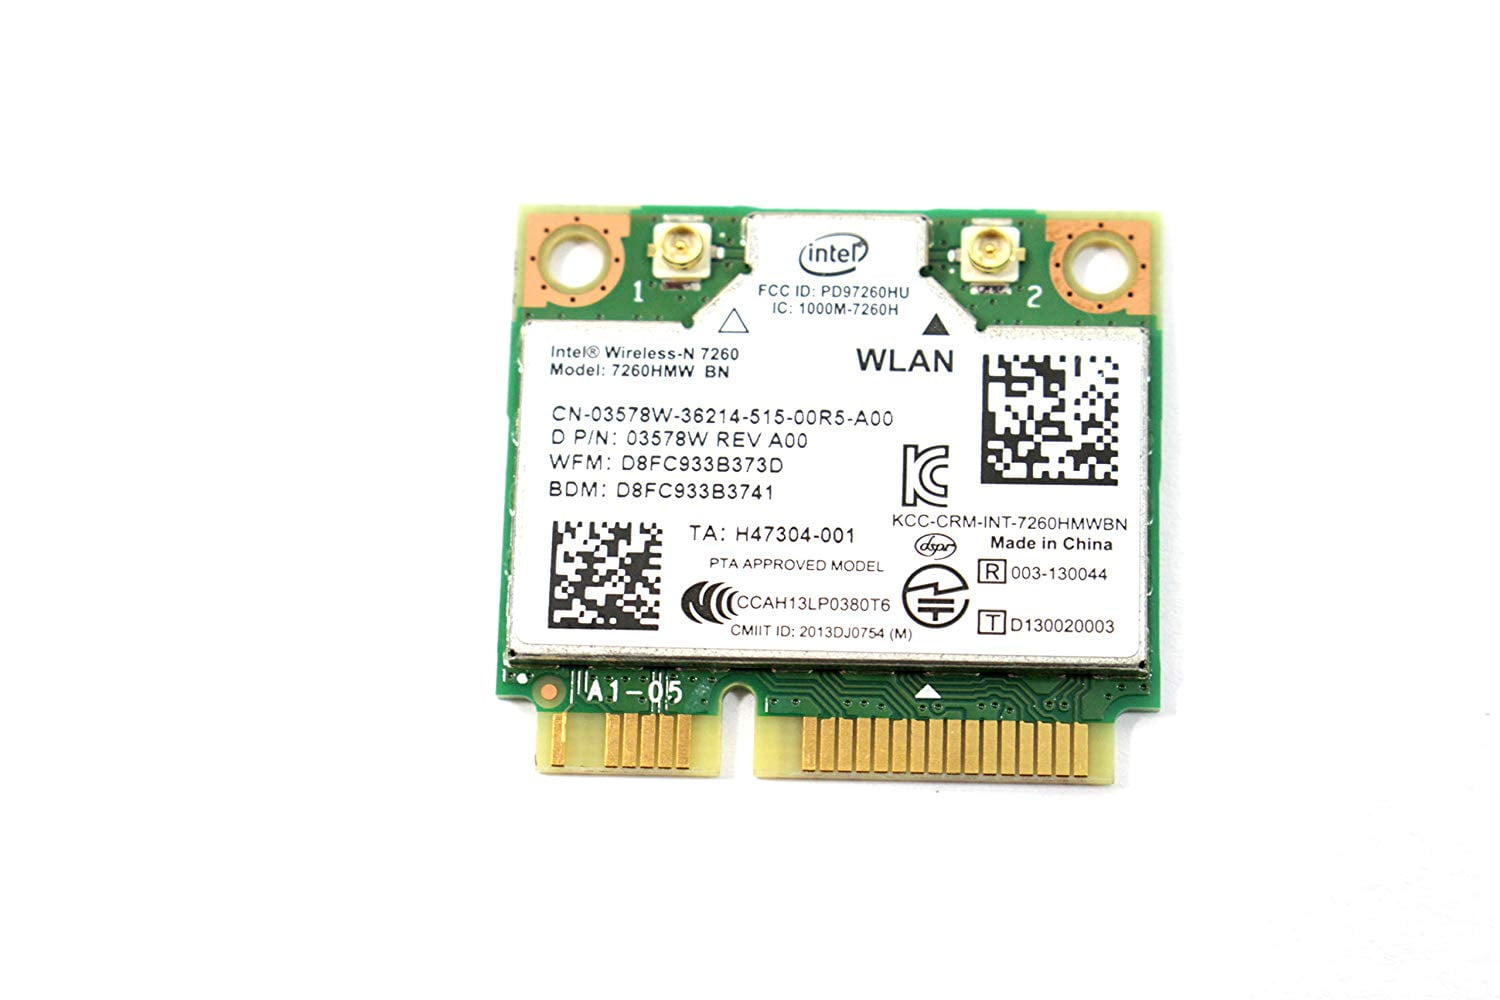 Intel 7260.HMW Dual Band Wireless-AC 7260 Network Adapter PCI Express Half Mini Card 802.11 b/a/g/n/ac 